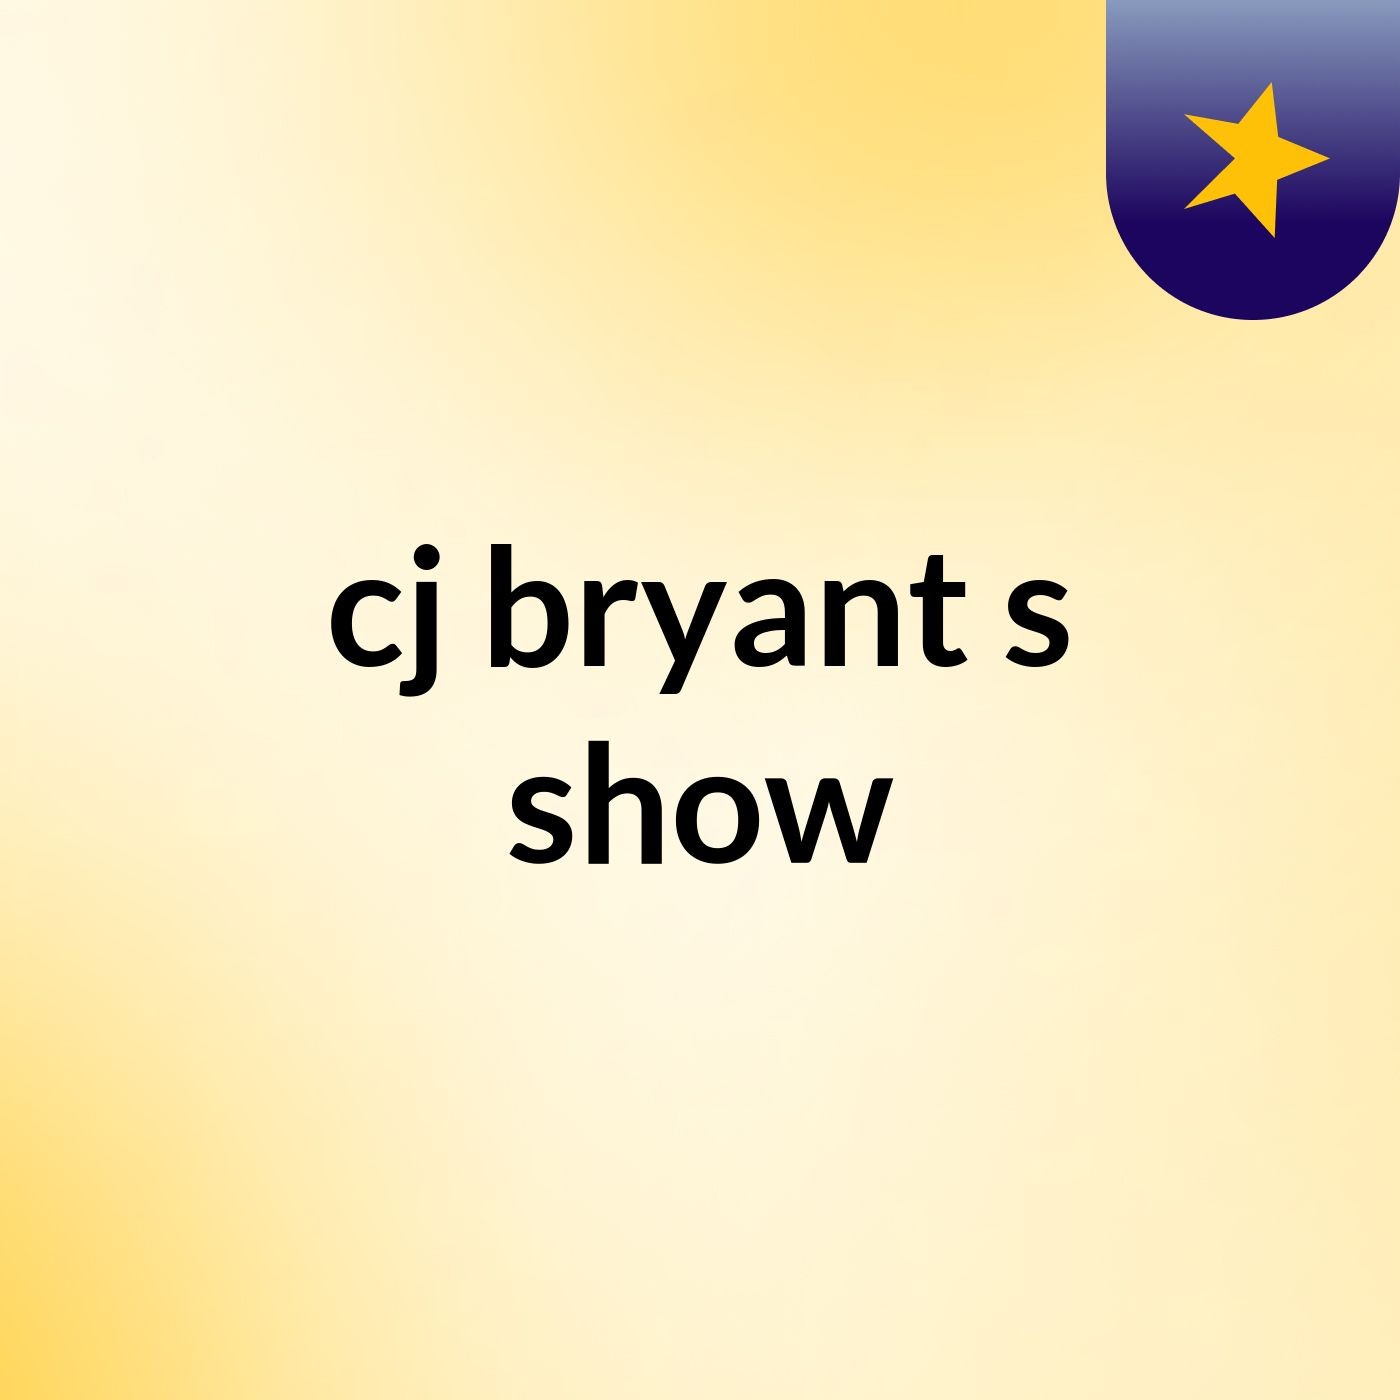 cj bryant's show